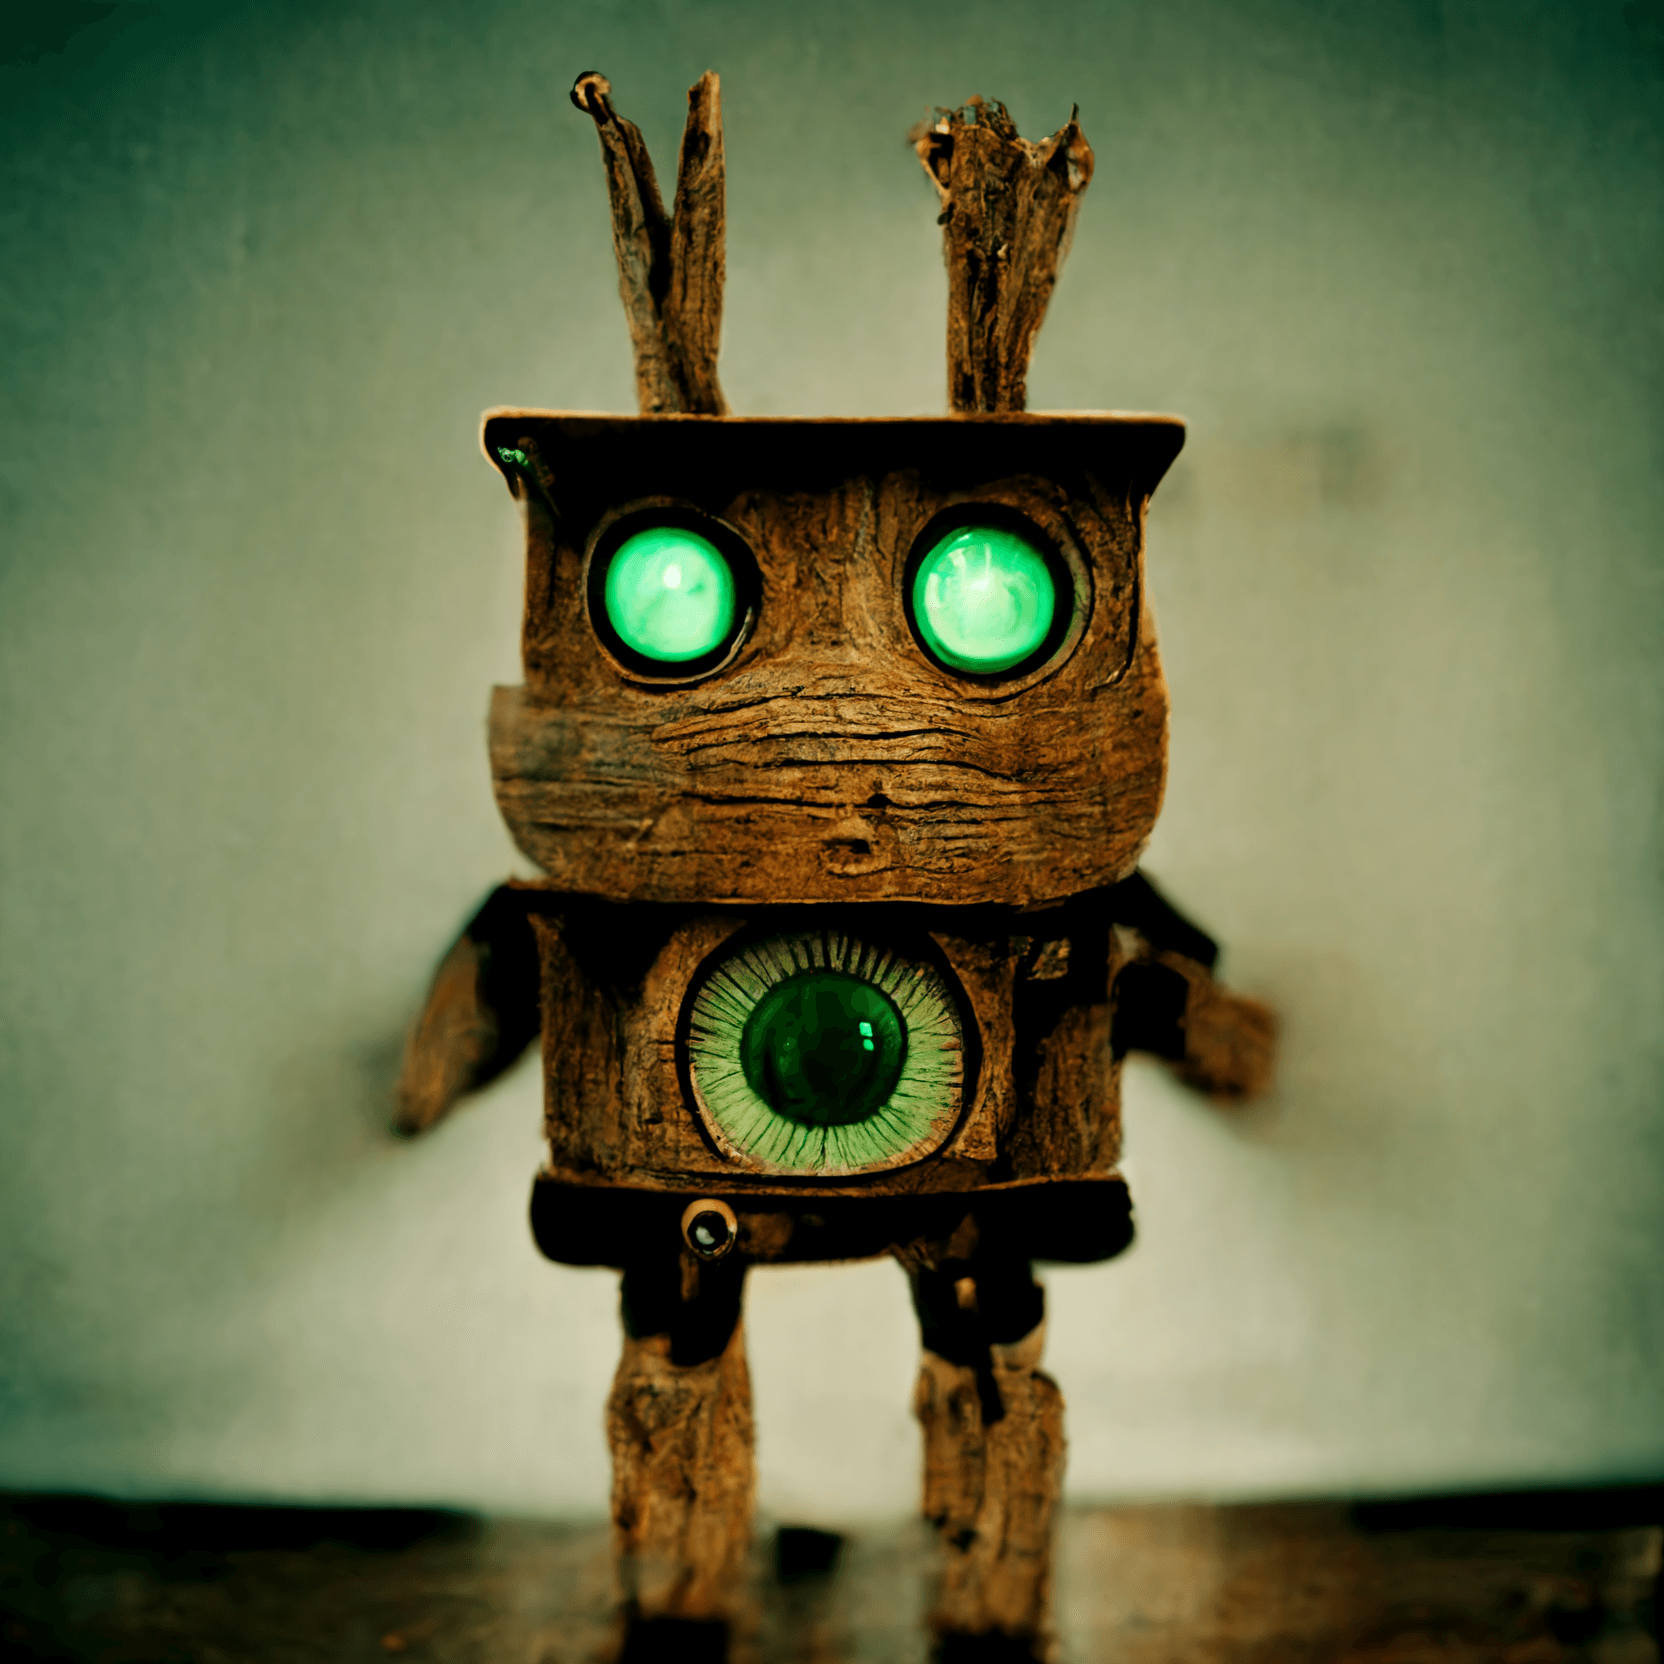 Wooden robot "Bray"